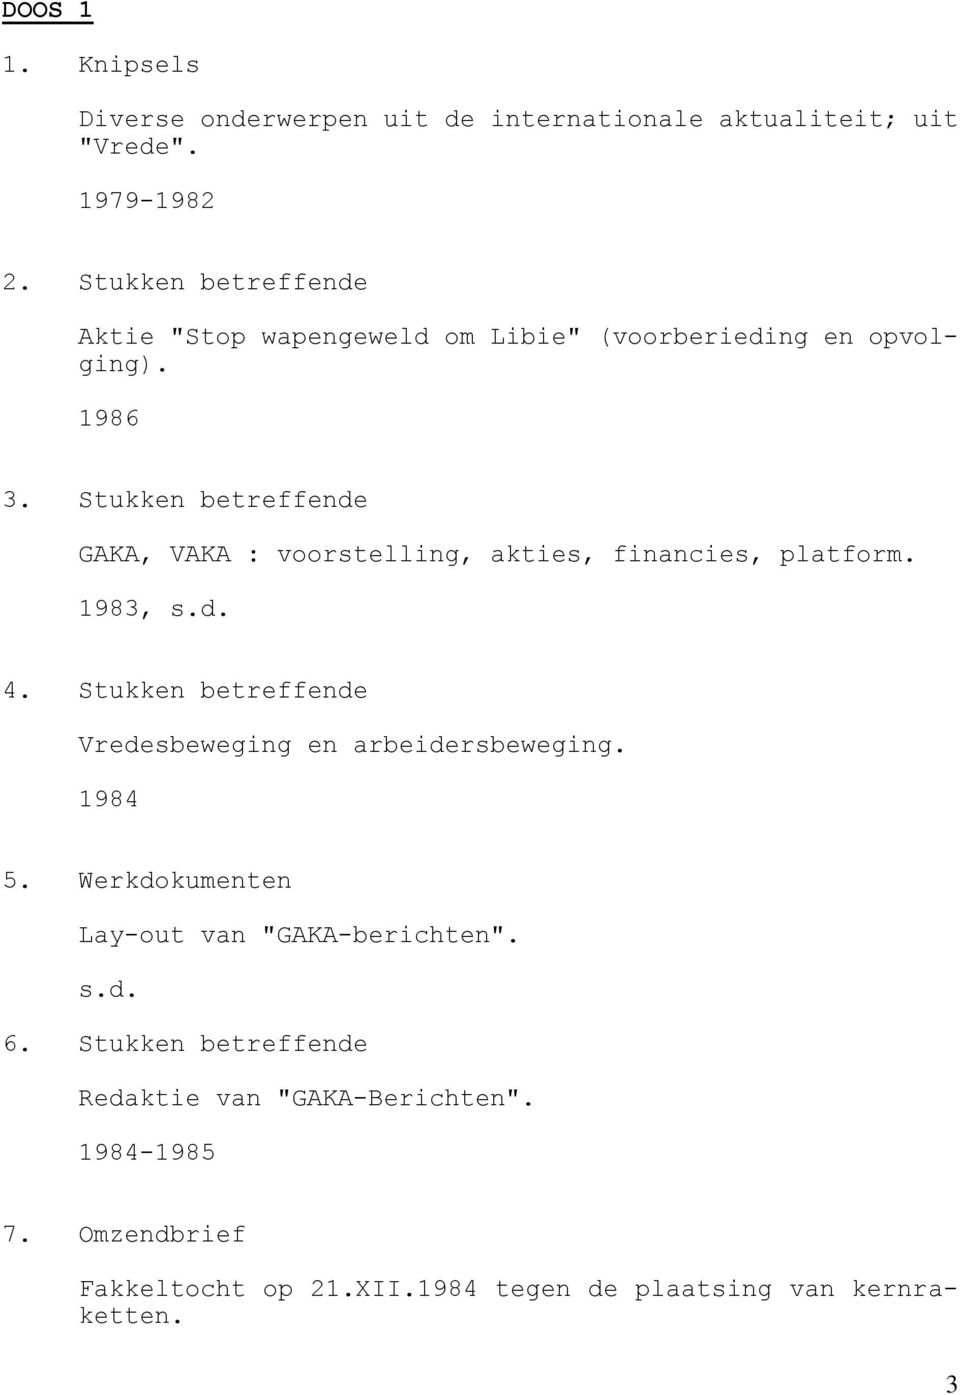 Stukken betreffende GAKA, VAKA : voorstelling, akties, financies, platform. 1983, 4.